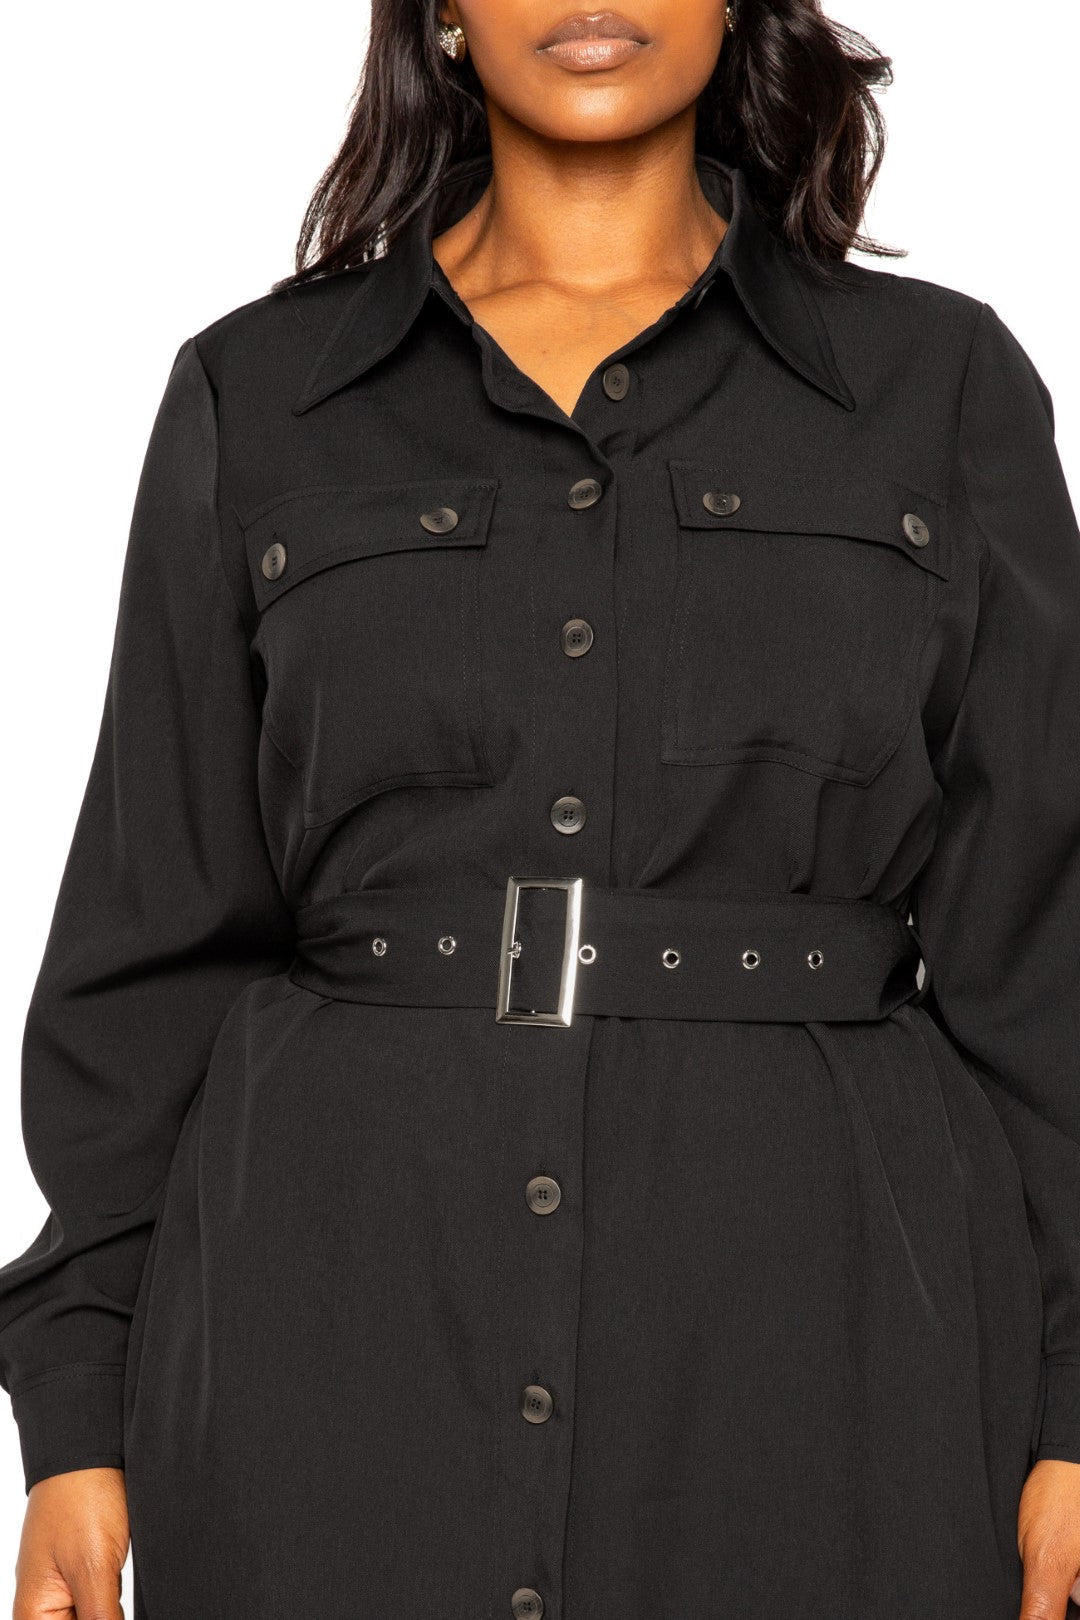 Satin Effect Belted Jacket Dress - Passion 4 Fashion USA